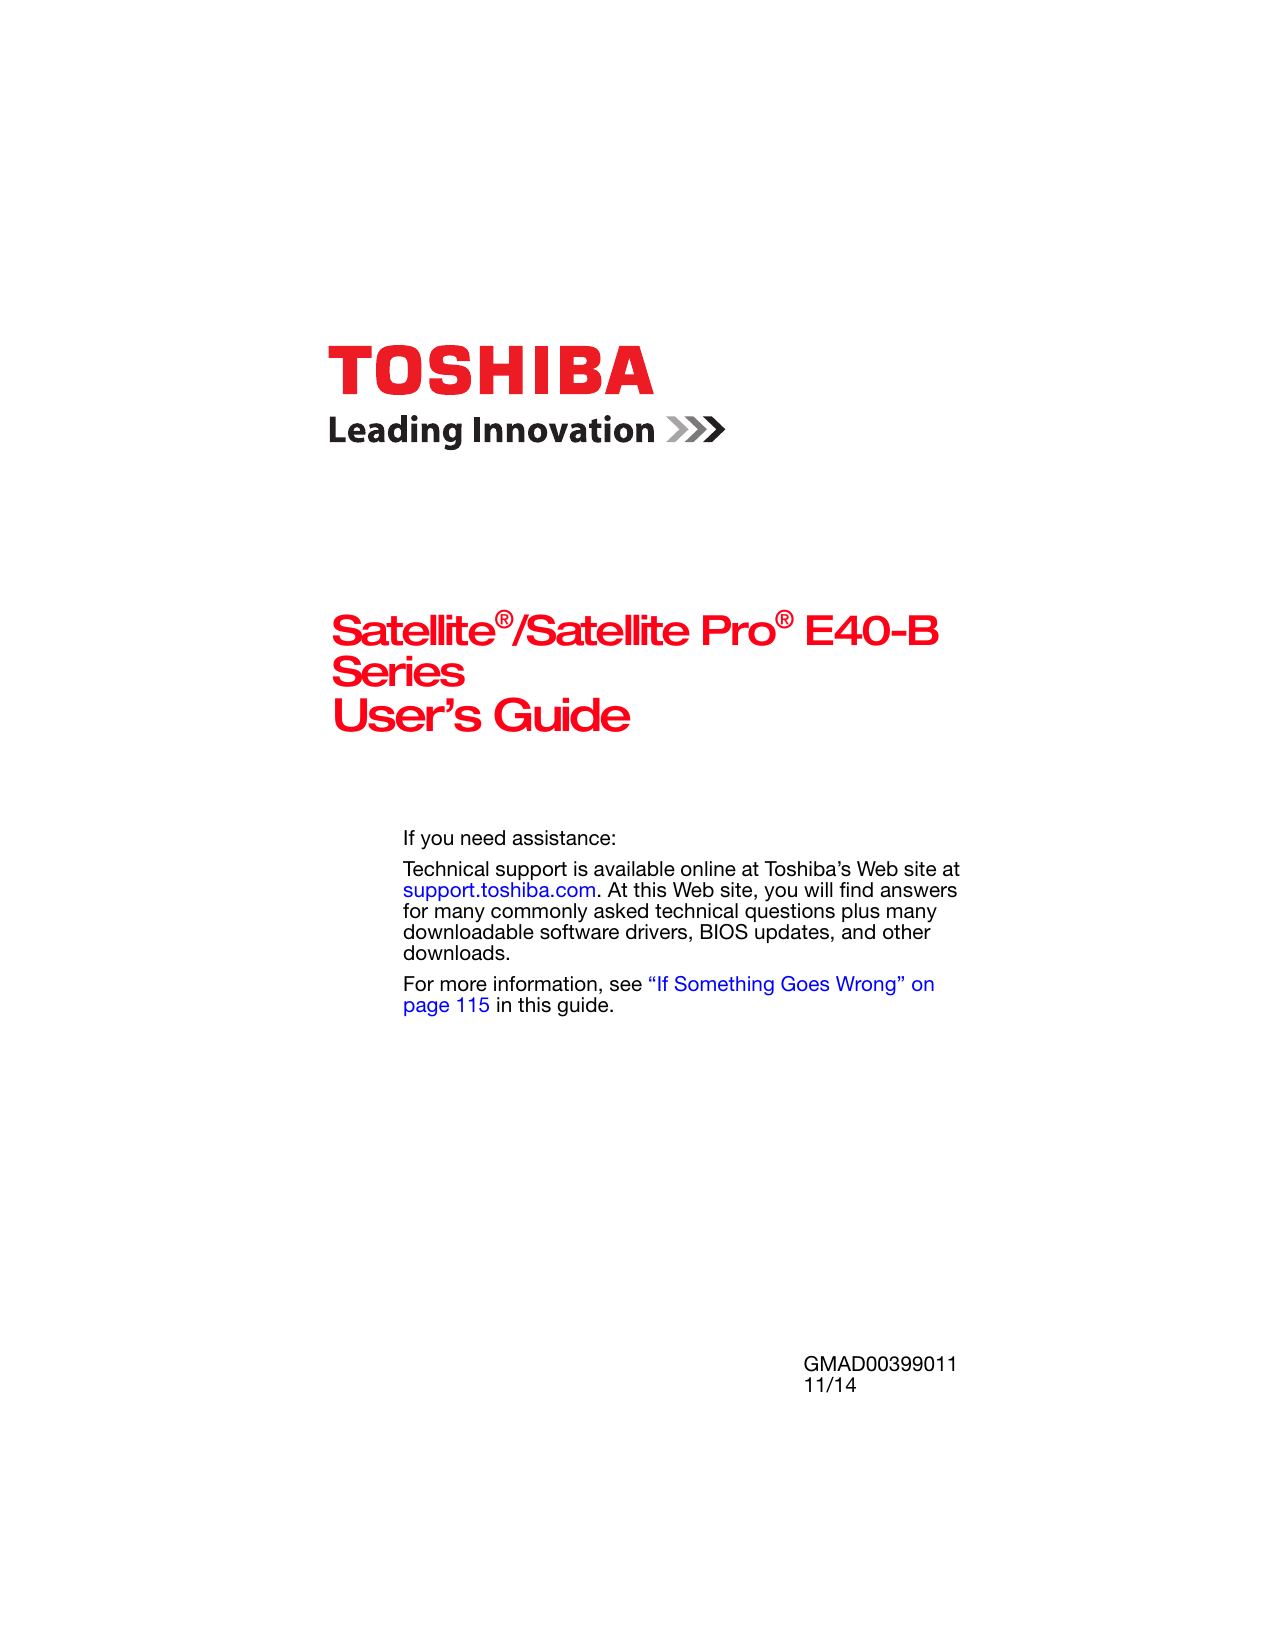 Toshiba-Hotkey-Nutzung Toshiba-Common-Modul nicht gefunden